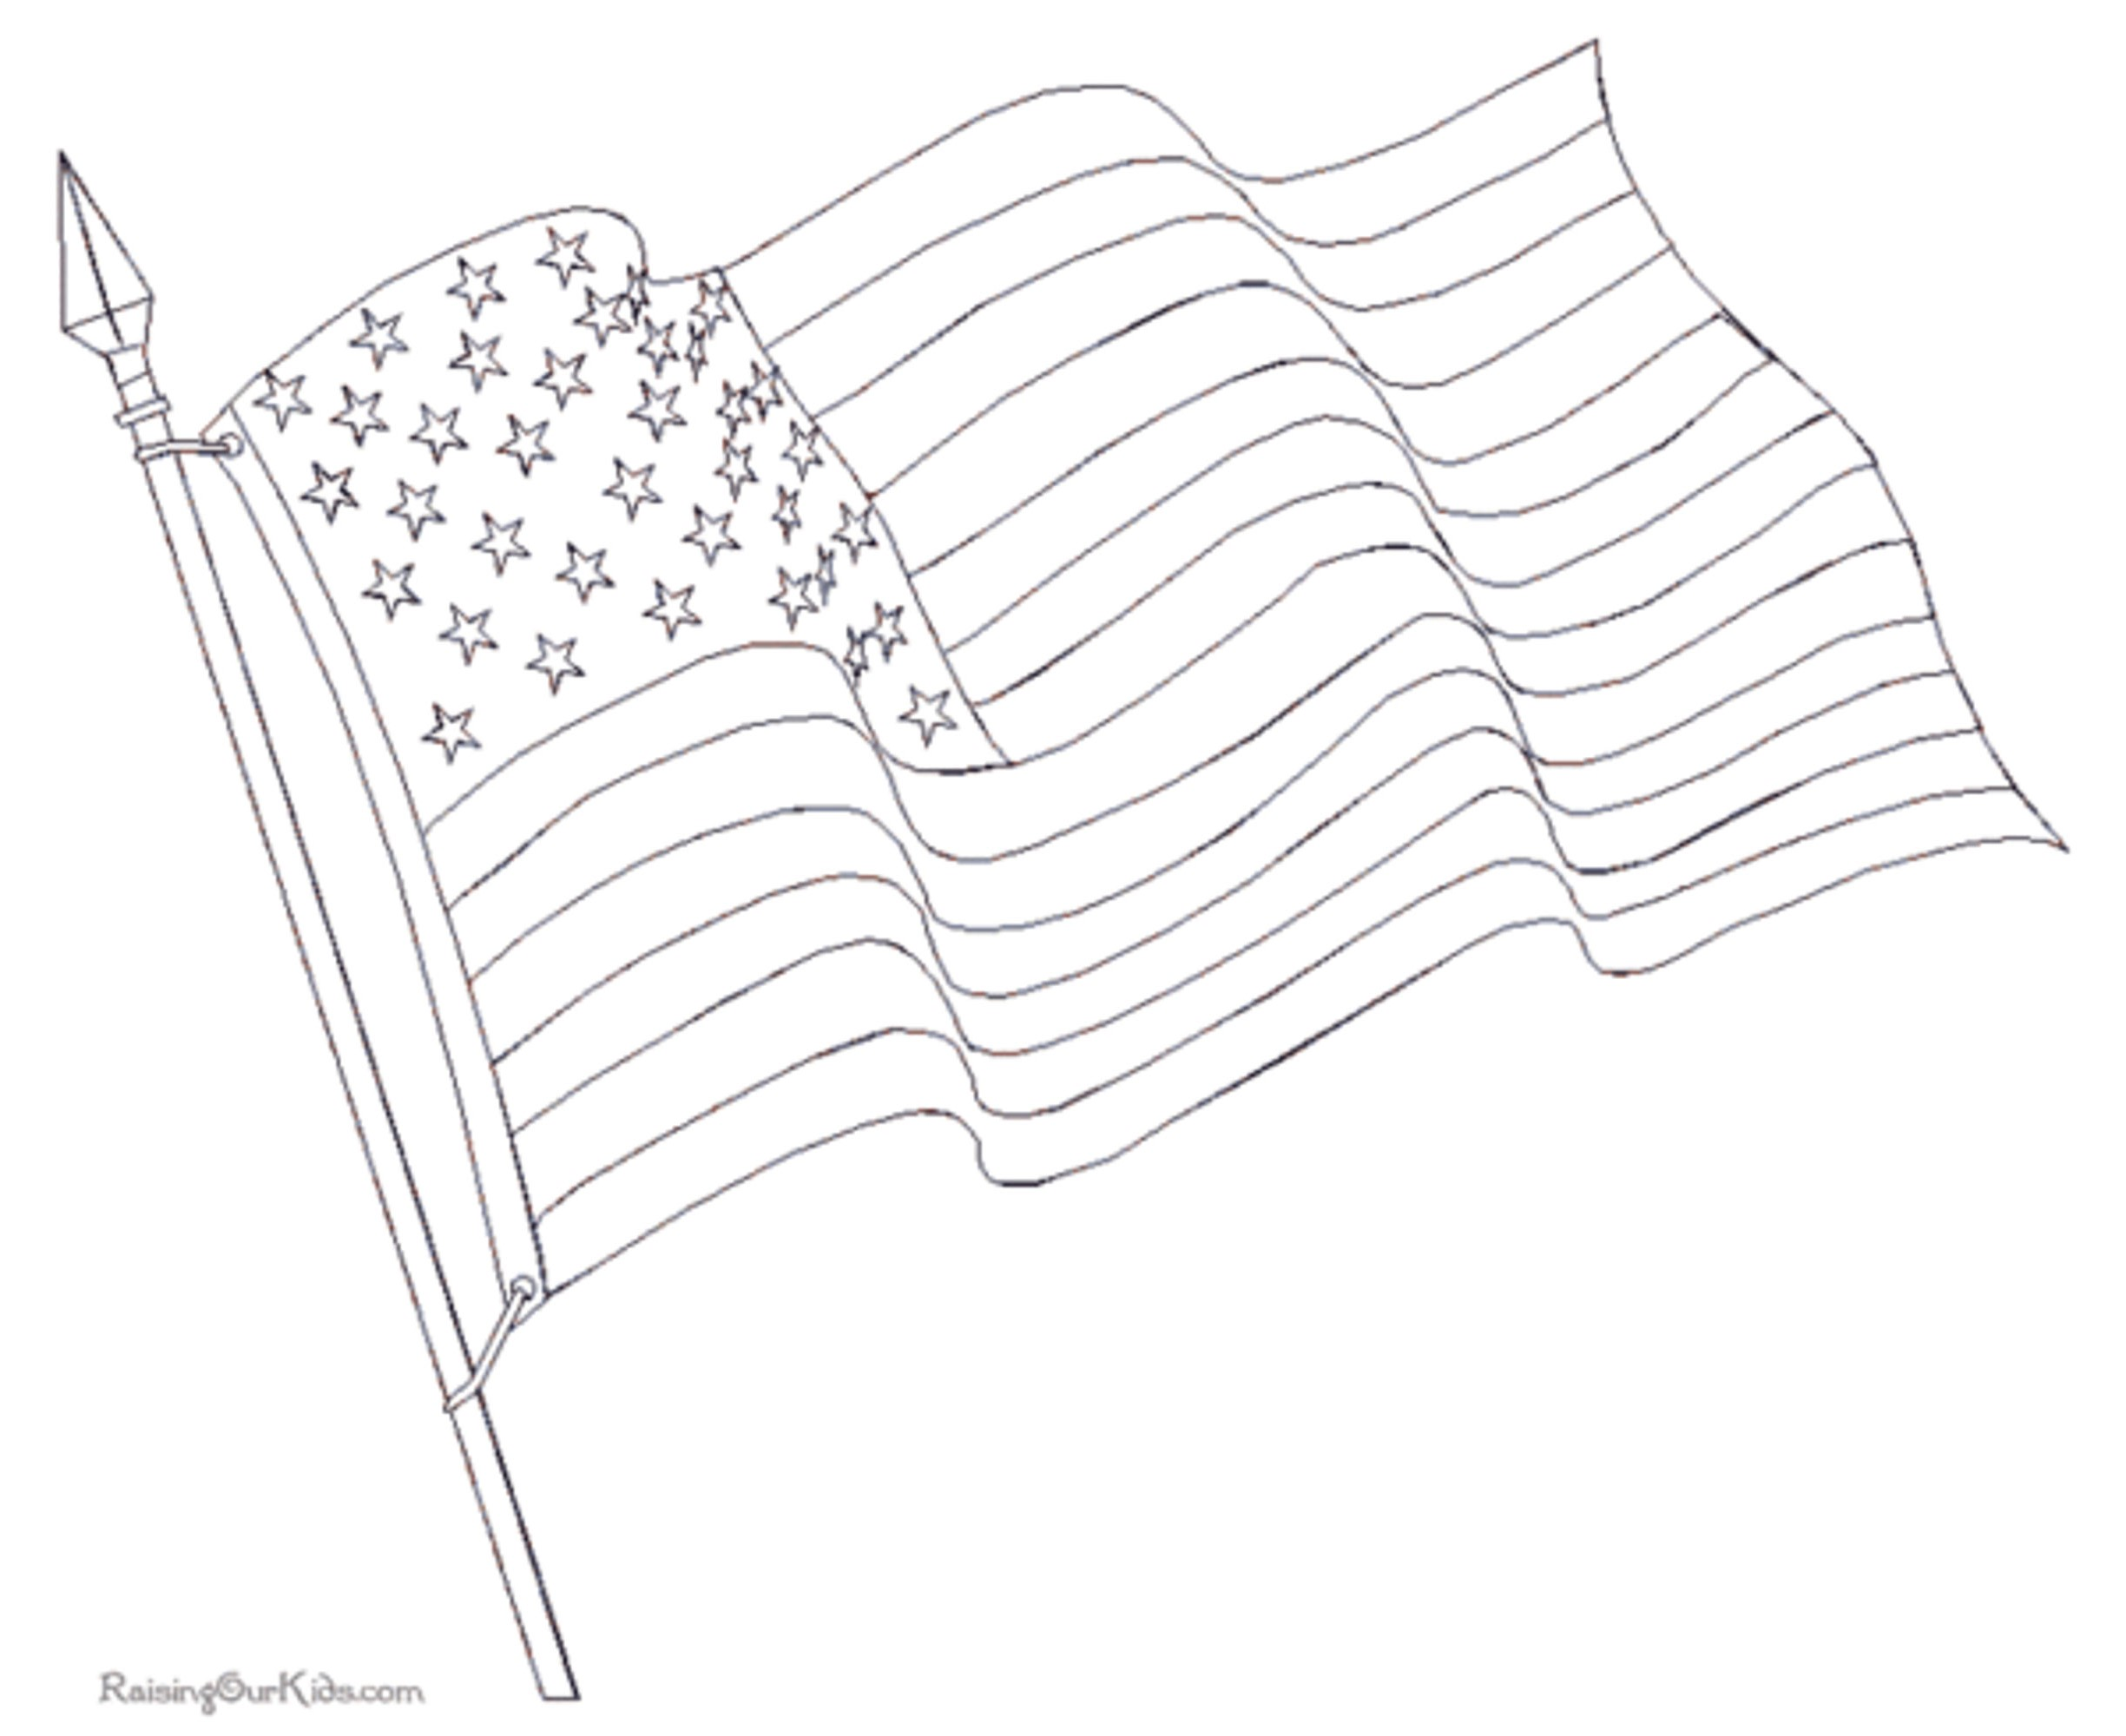 Free Waving American Flag Drawing, Download Free Waving American Flag